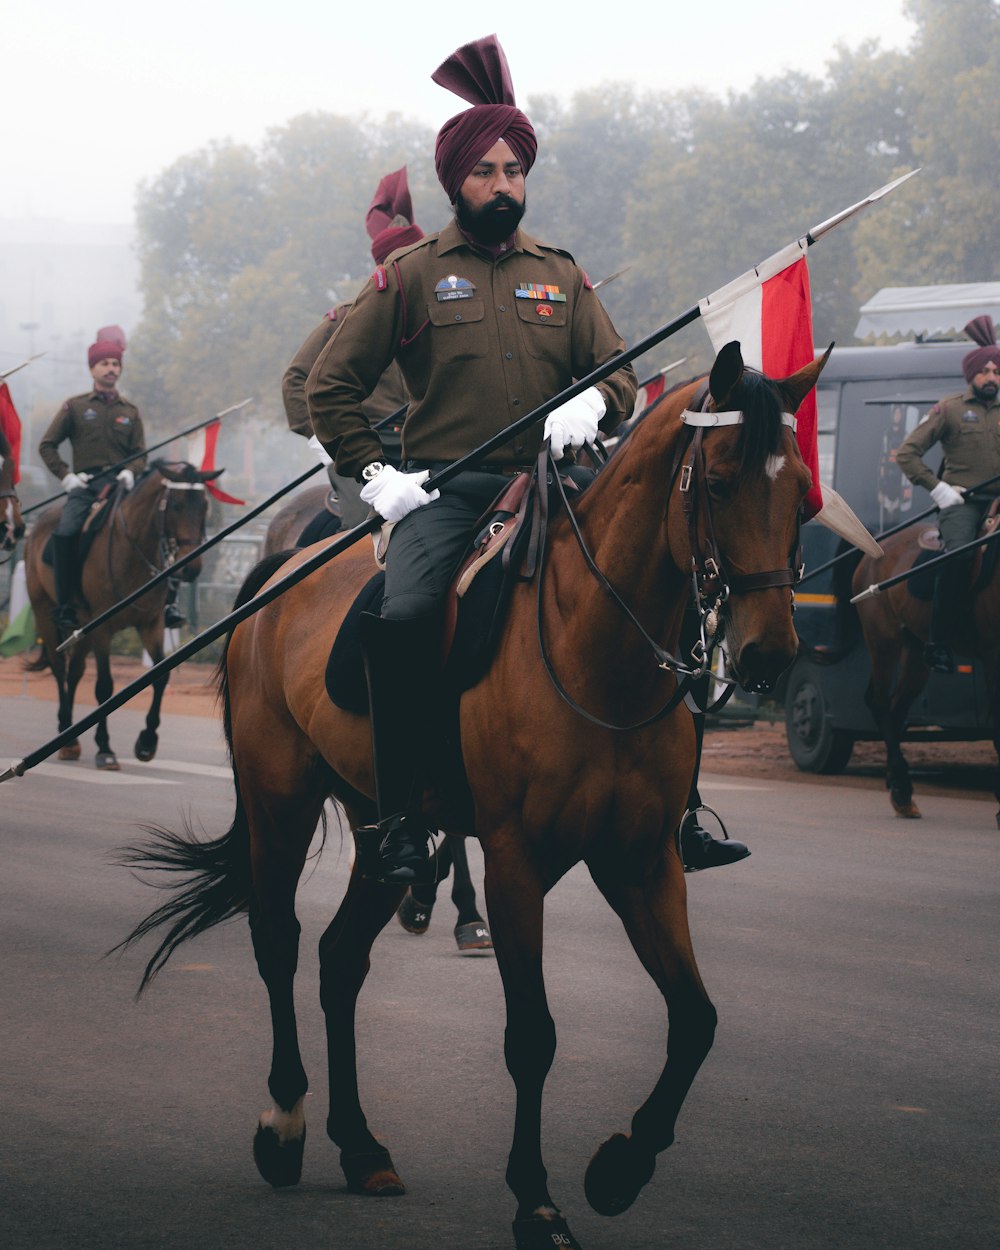 a man in a uniform riding a horse